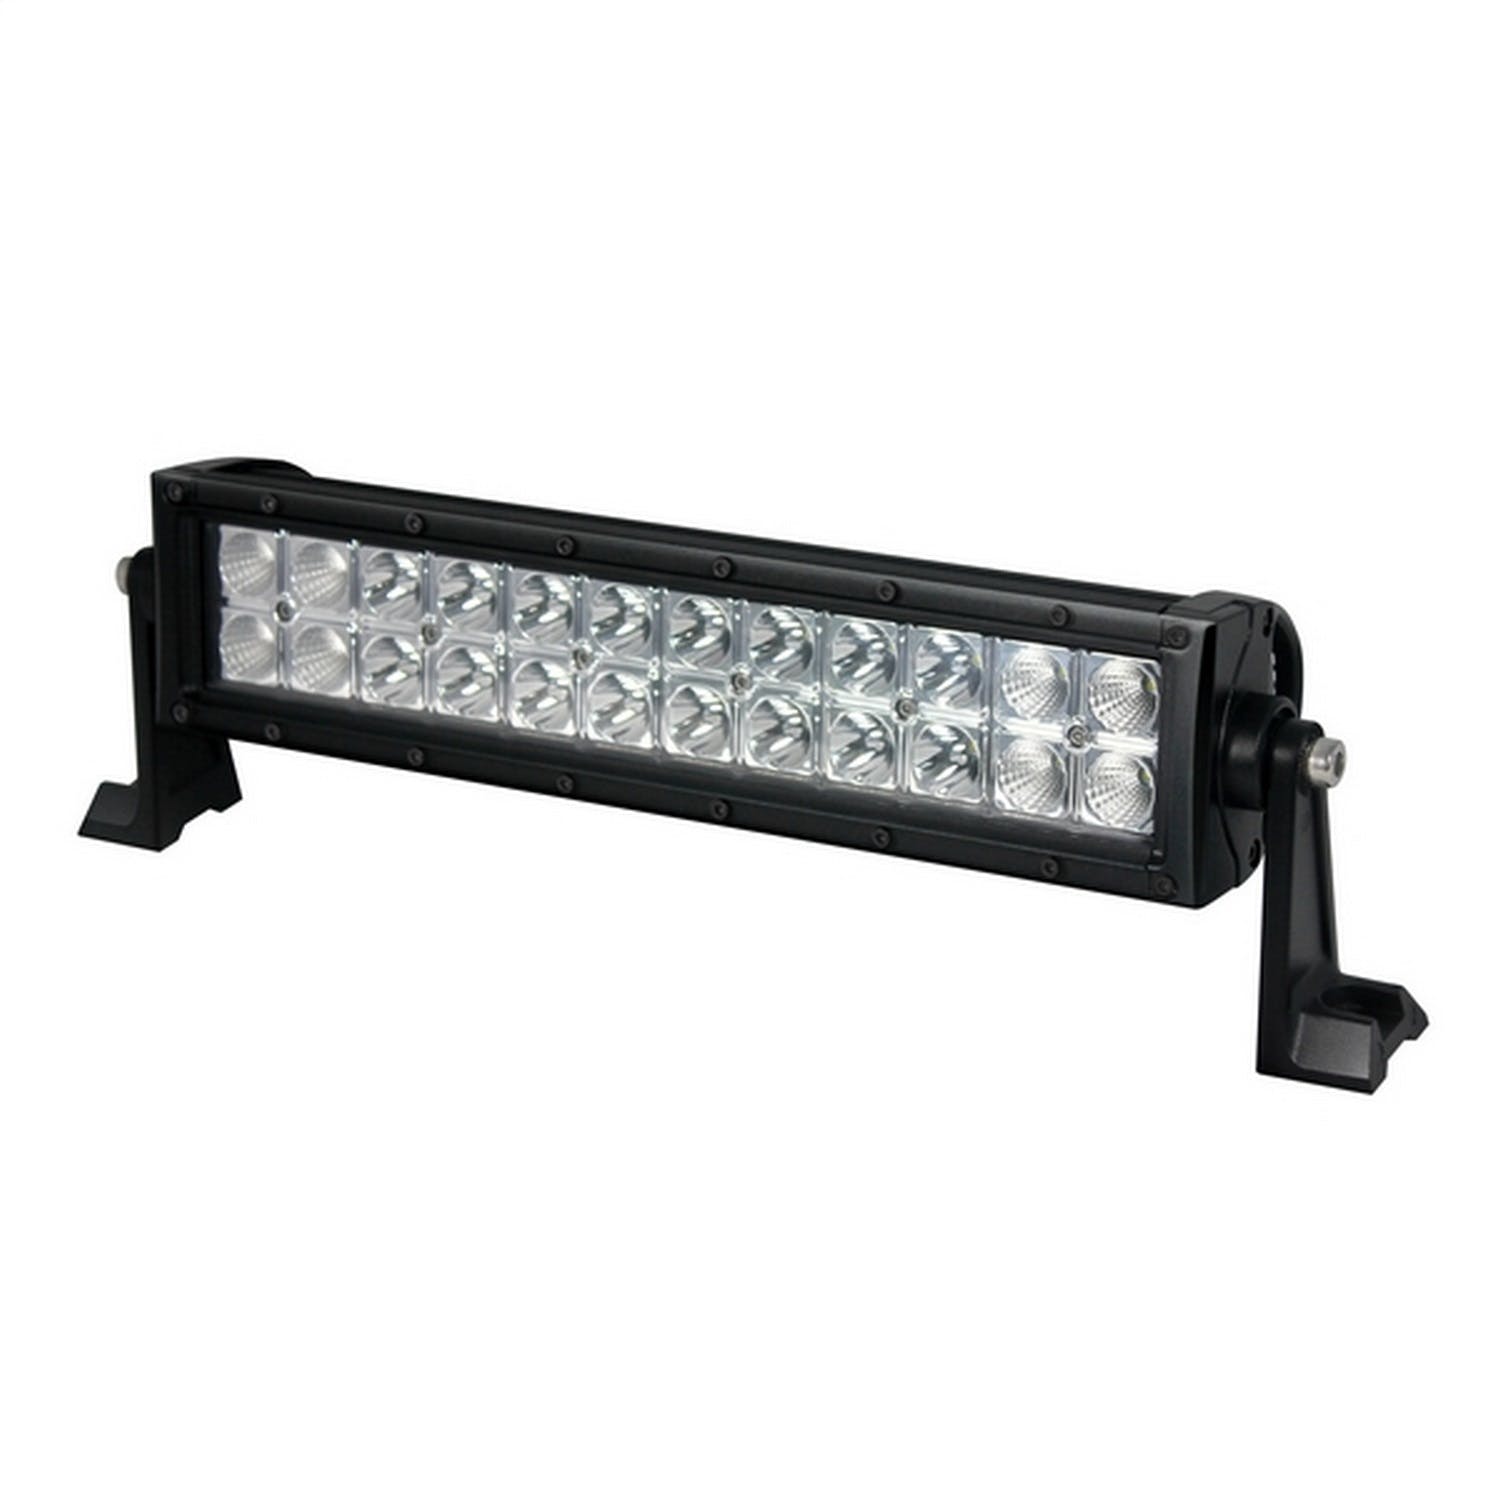 BrightSource 72012 Off-Road LED Light Bar